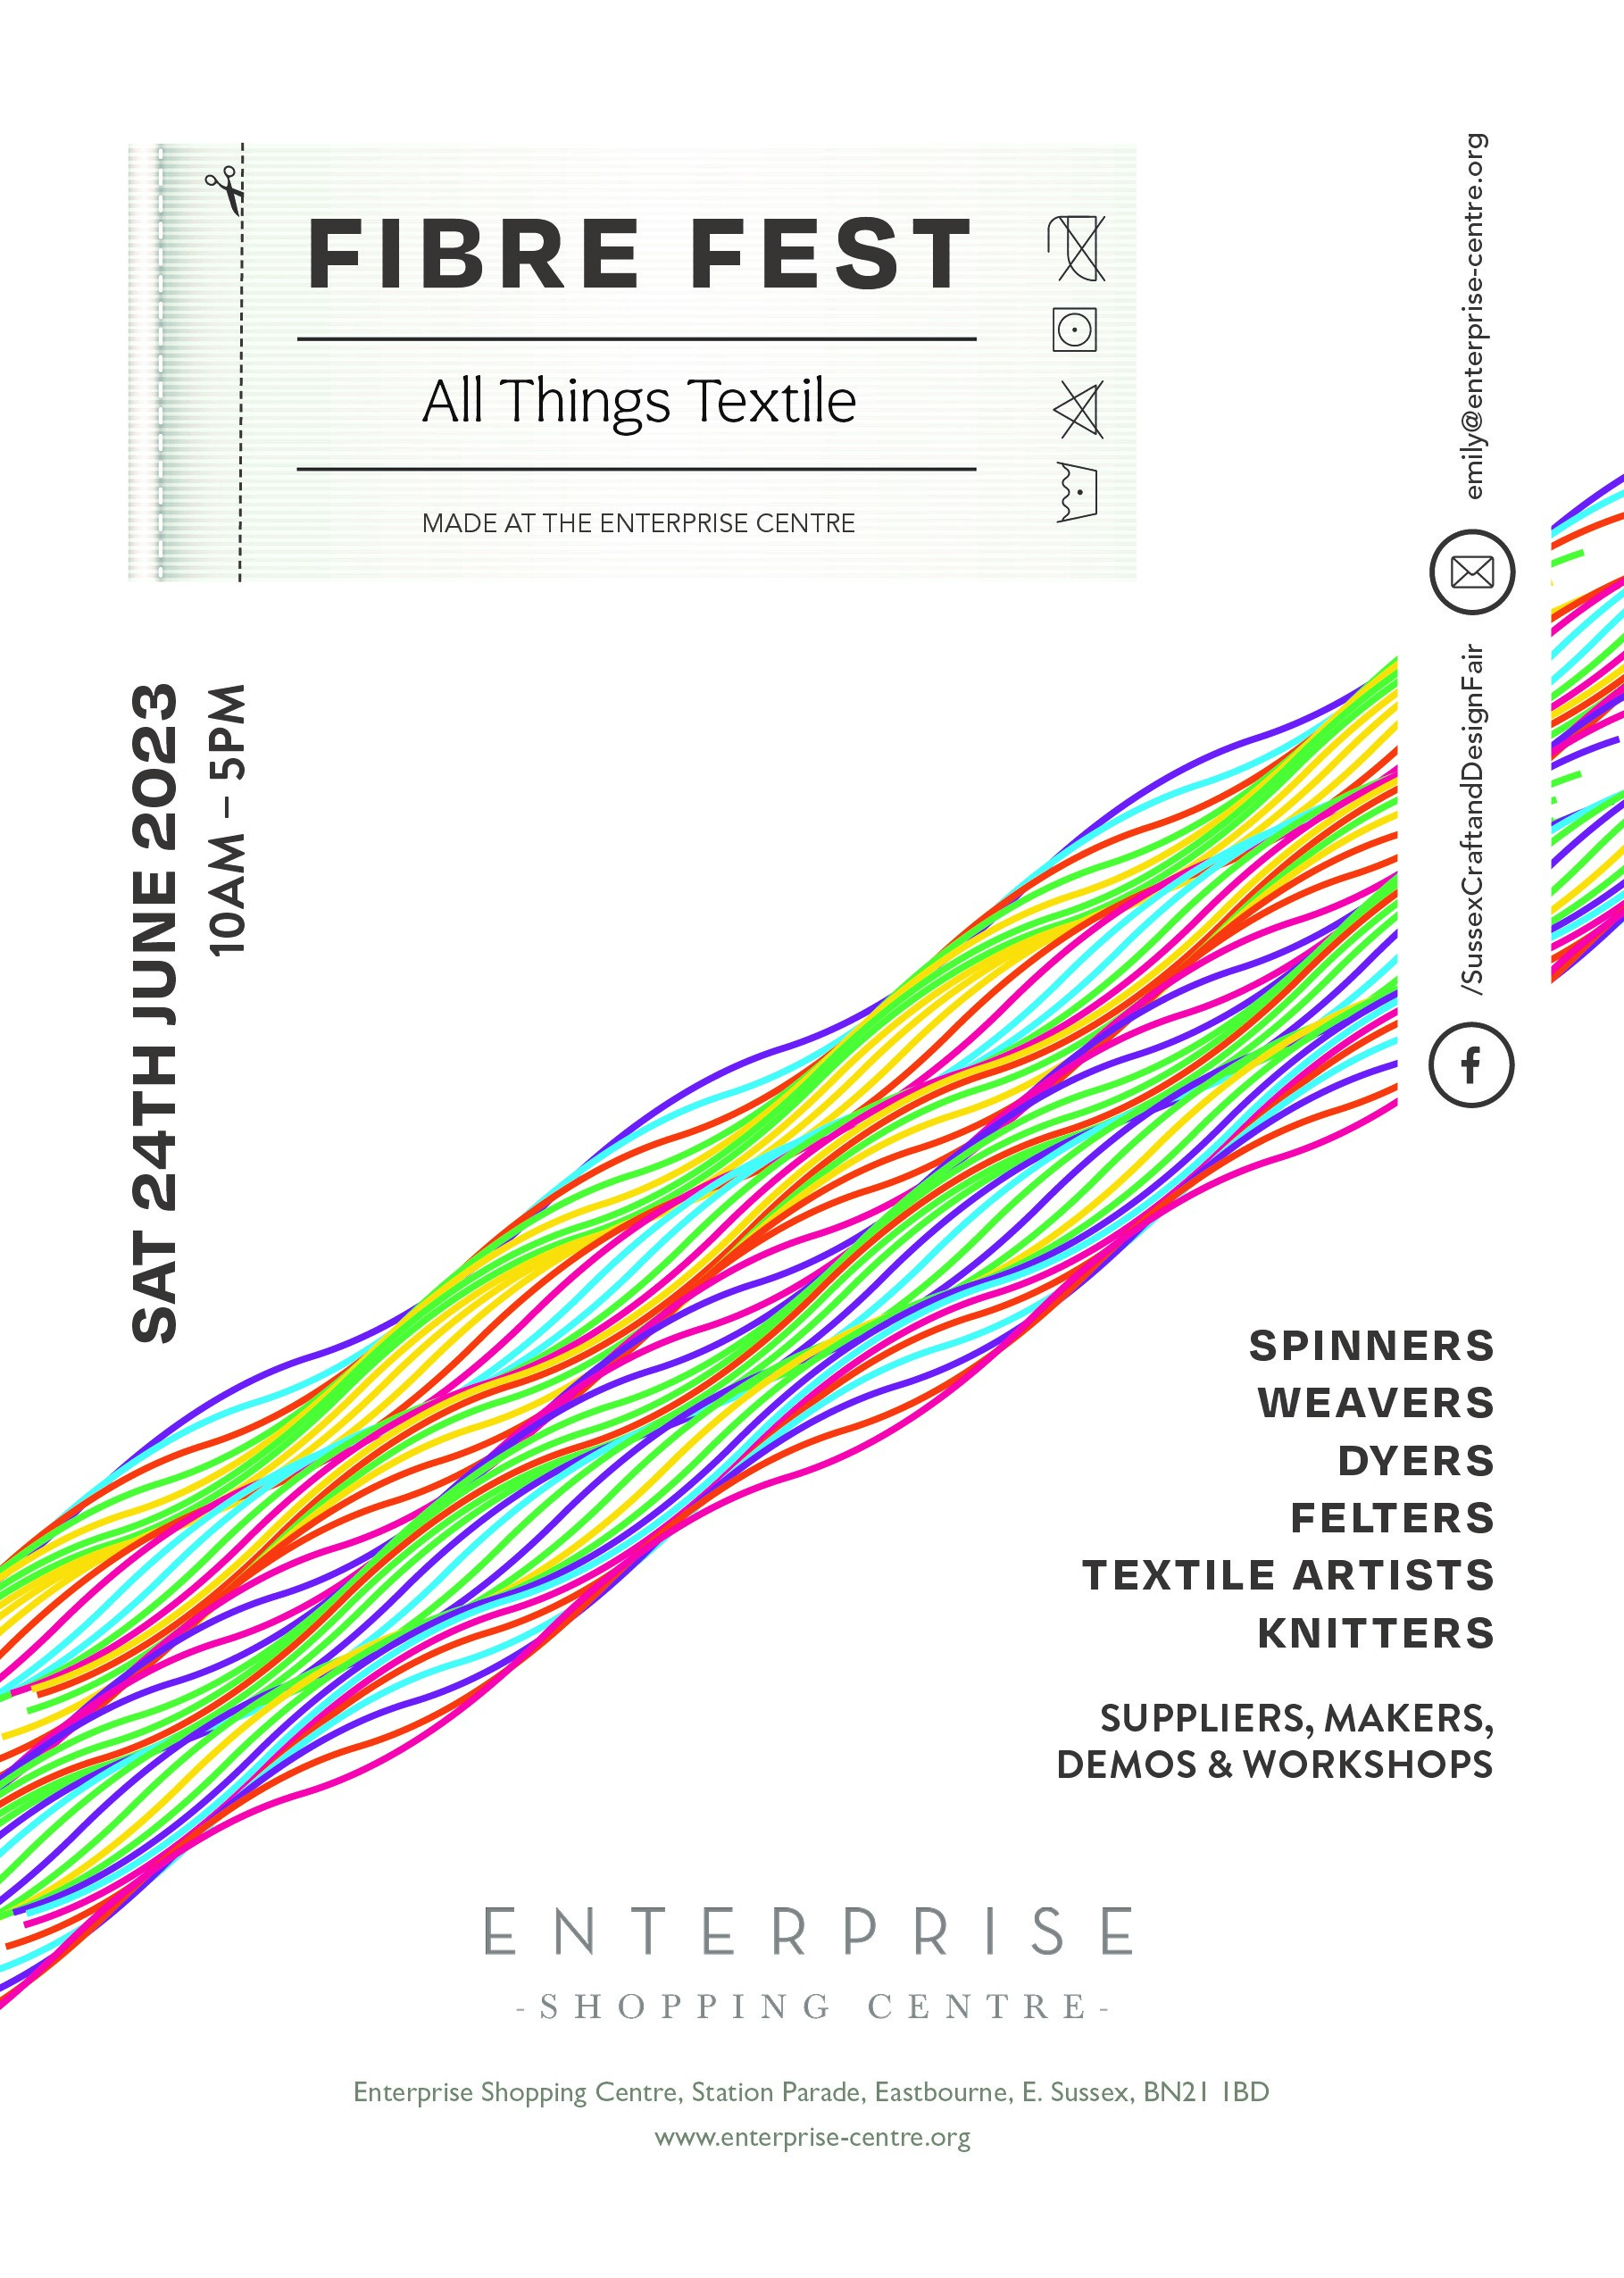 Popular Textiles event returns to the Enterprise